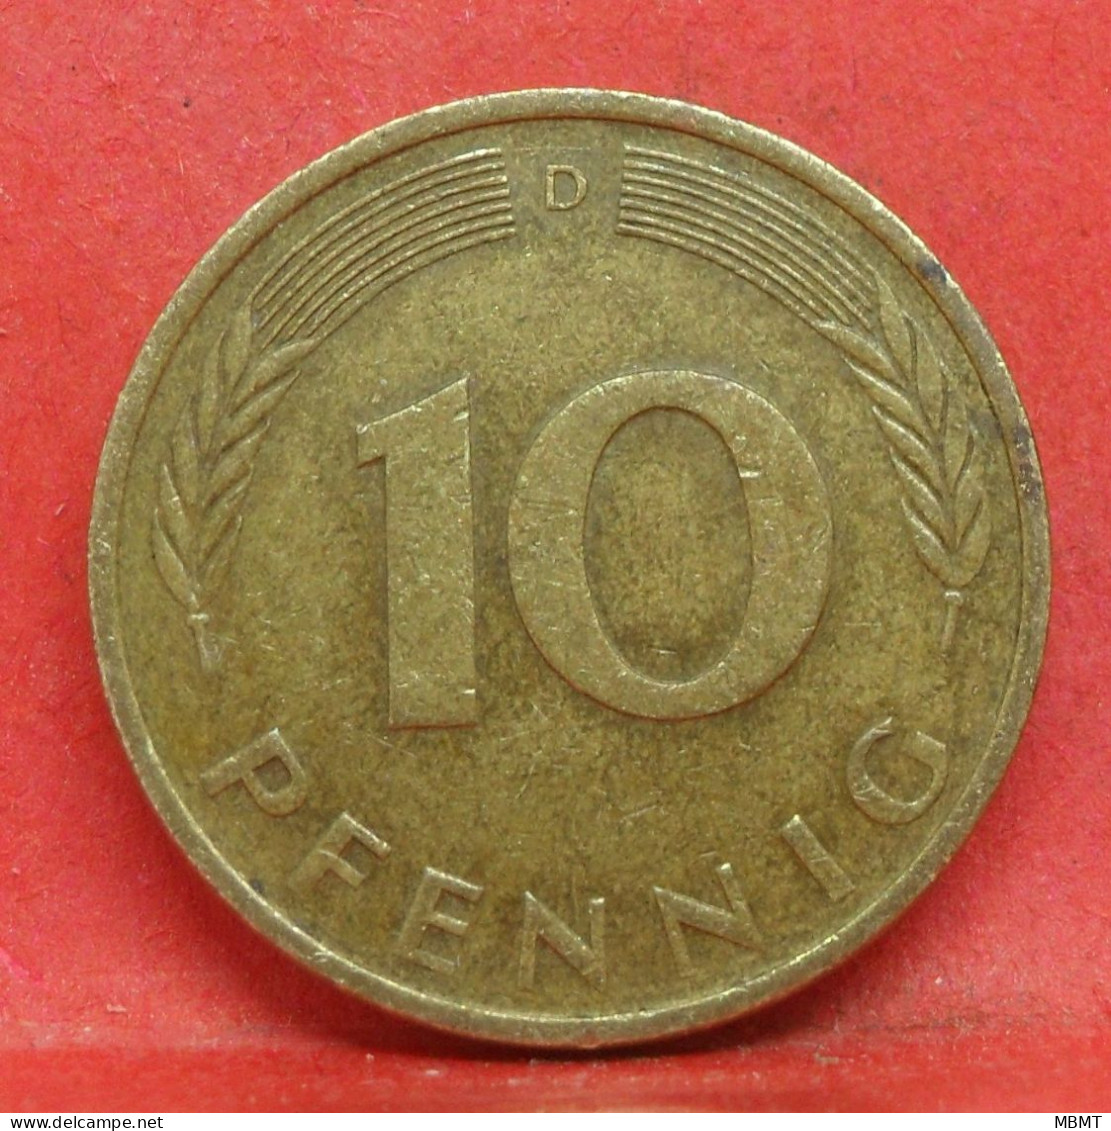 10 Pfennig 1972 D - TTB - Pièce Monnaie Allemagne - Article N°1496 - 10 Pfennig